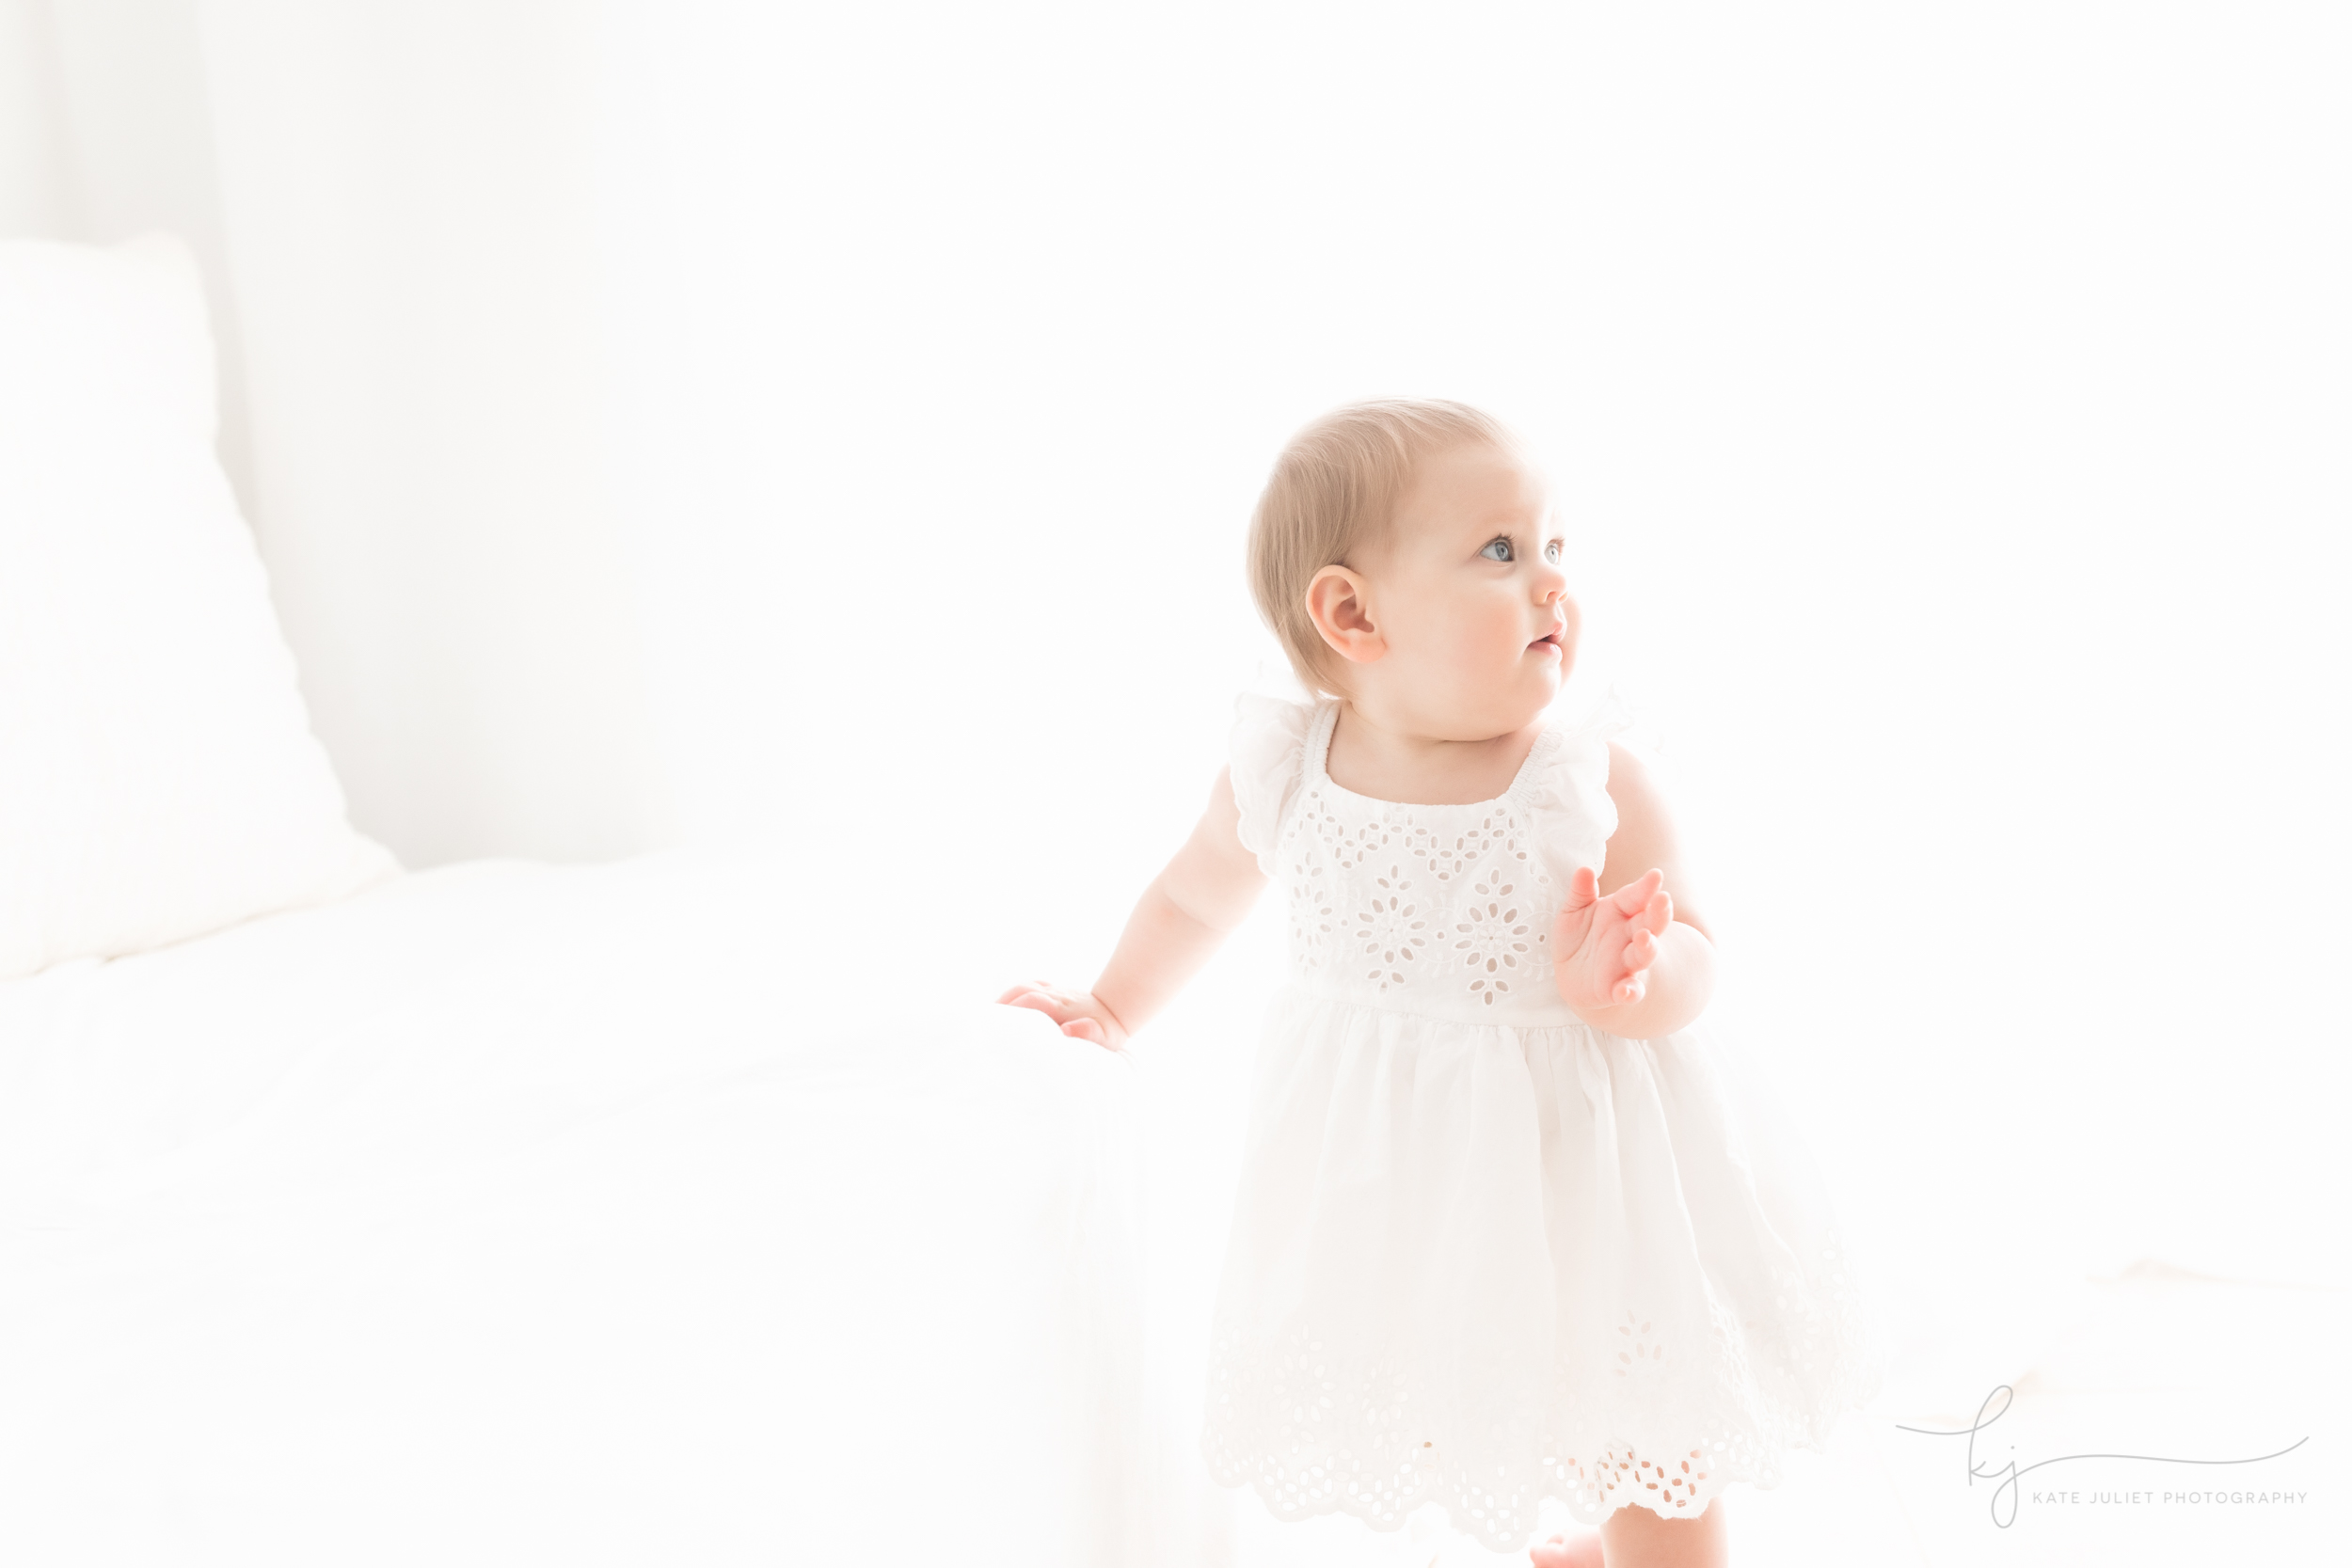 Northern VA Baby Photographer | Kate Juliet Photography